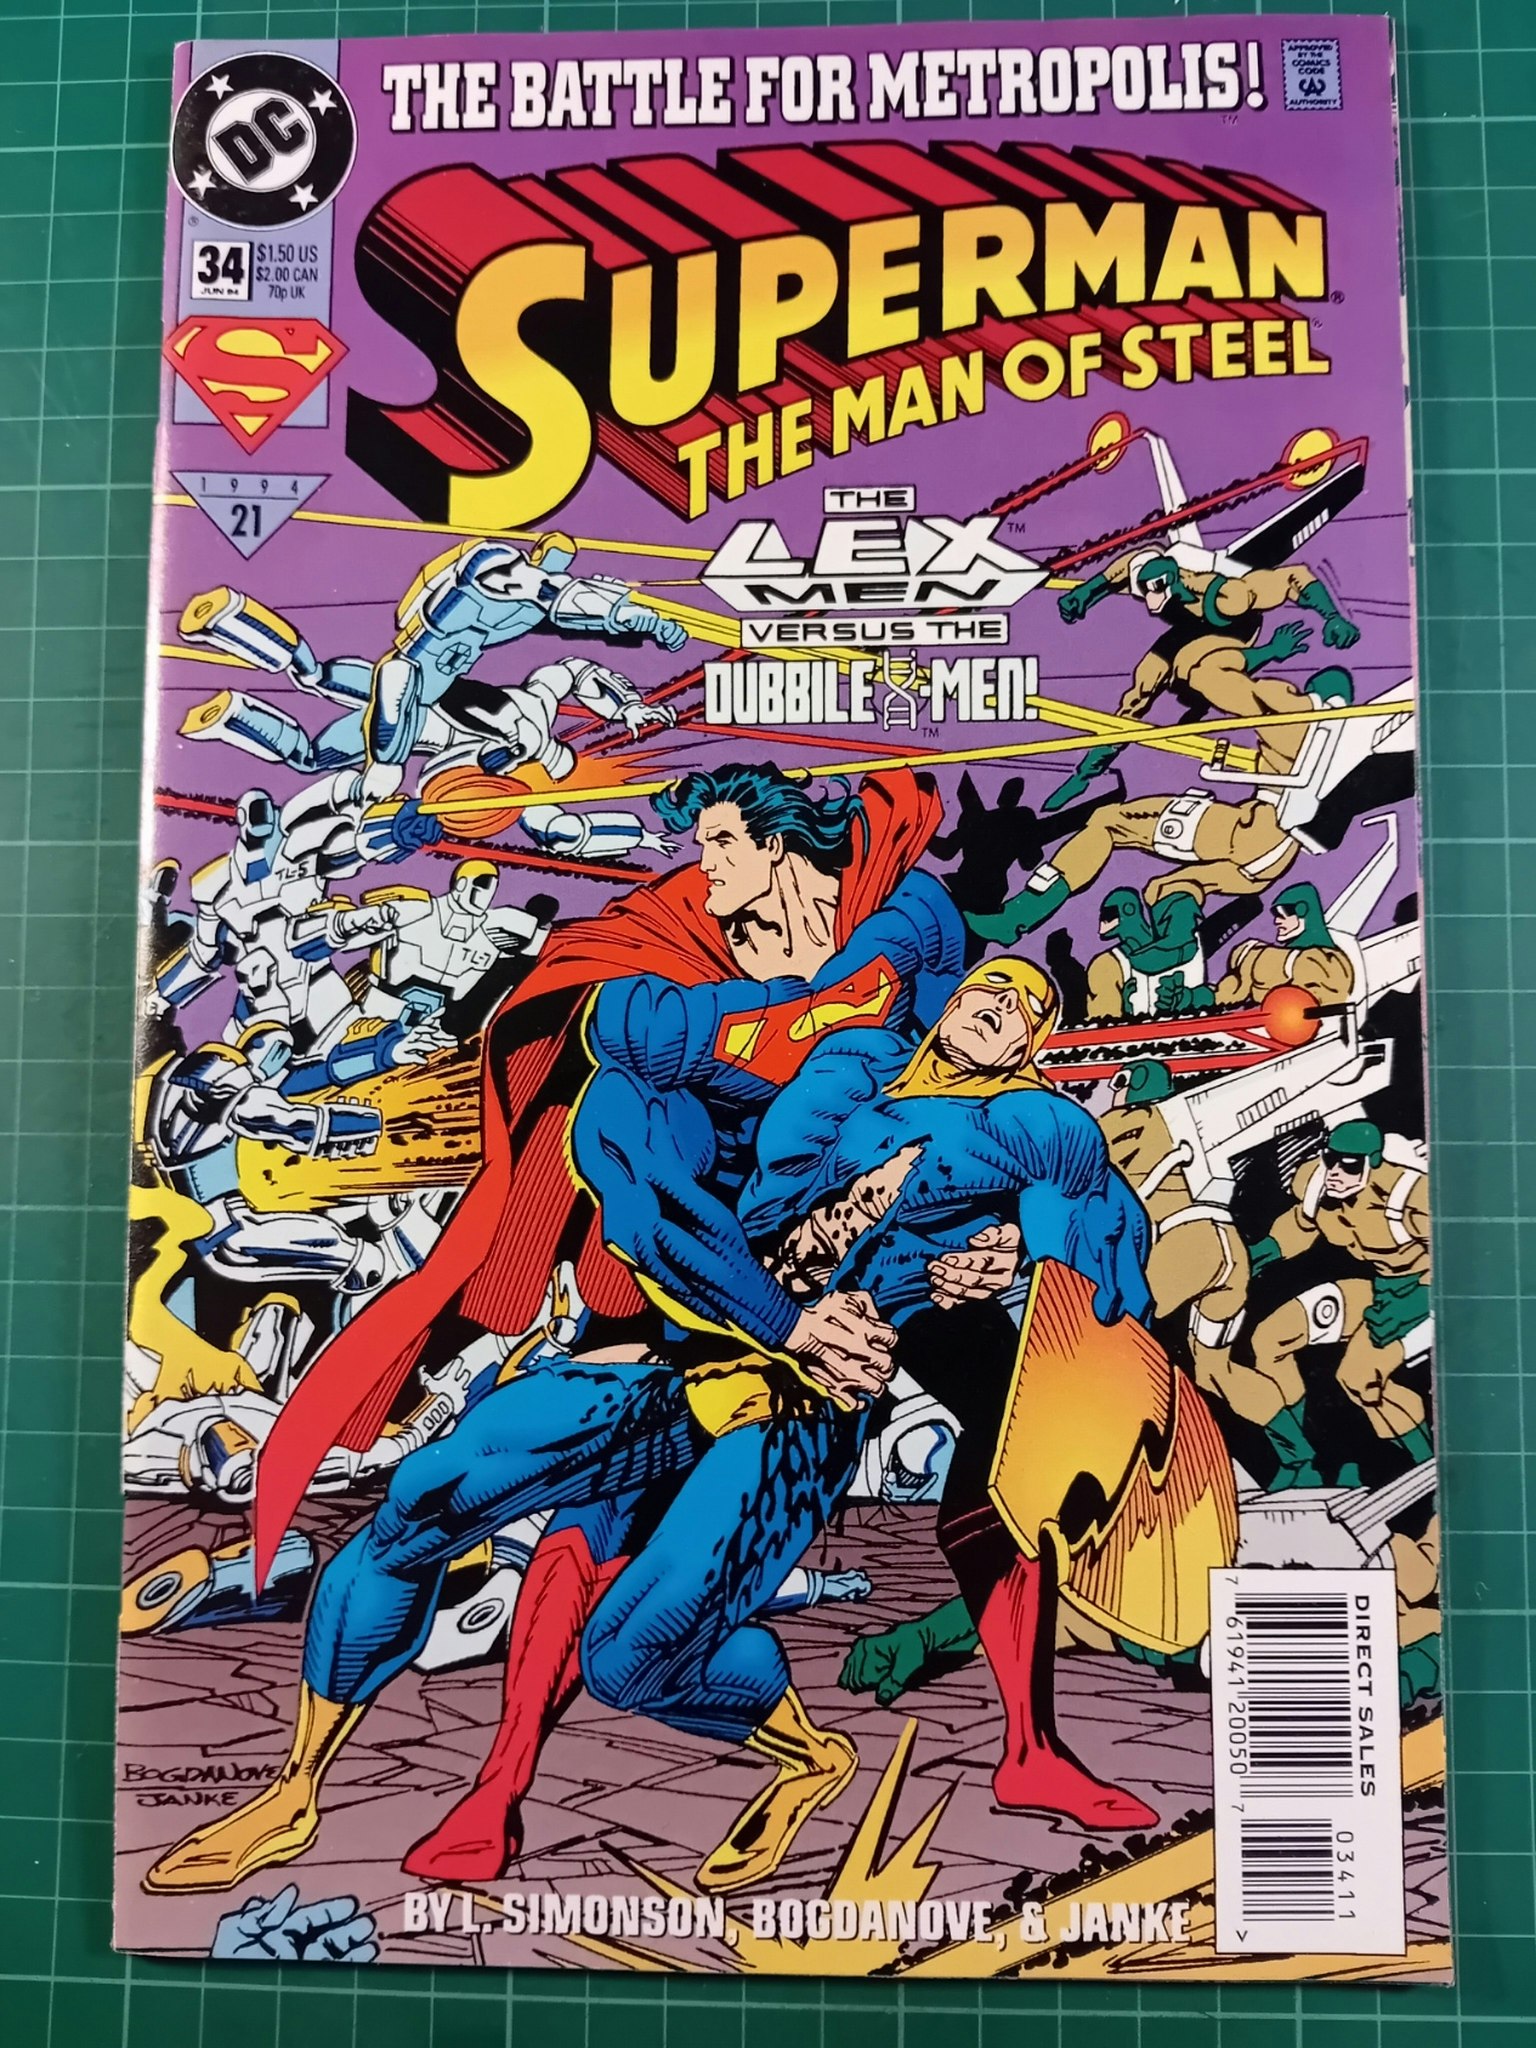 Superman the man of steel #34